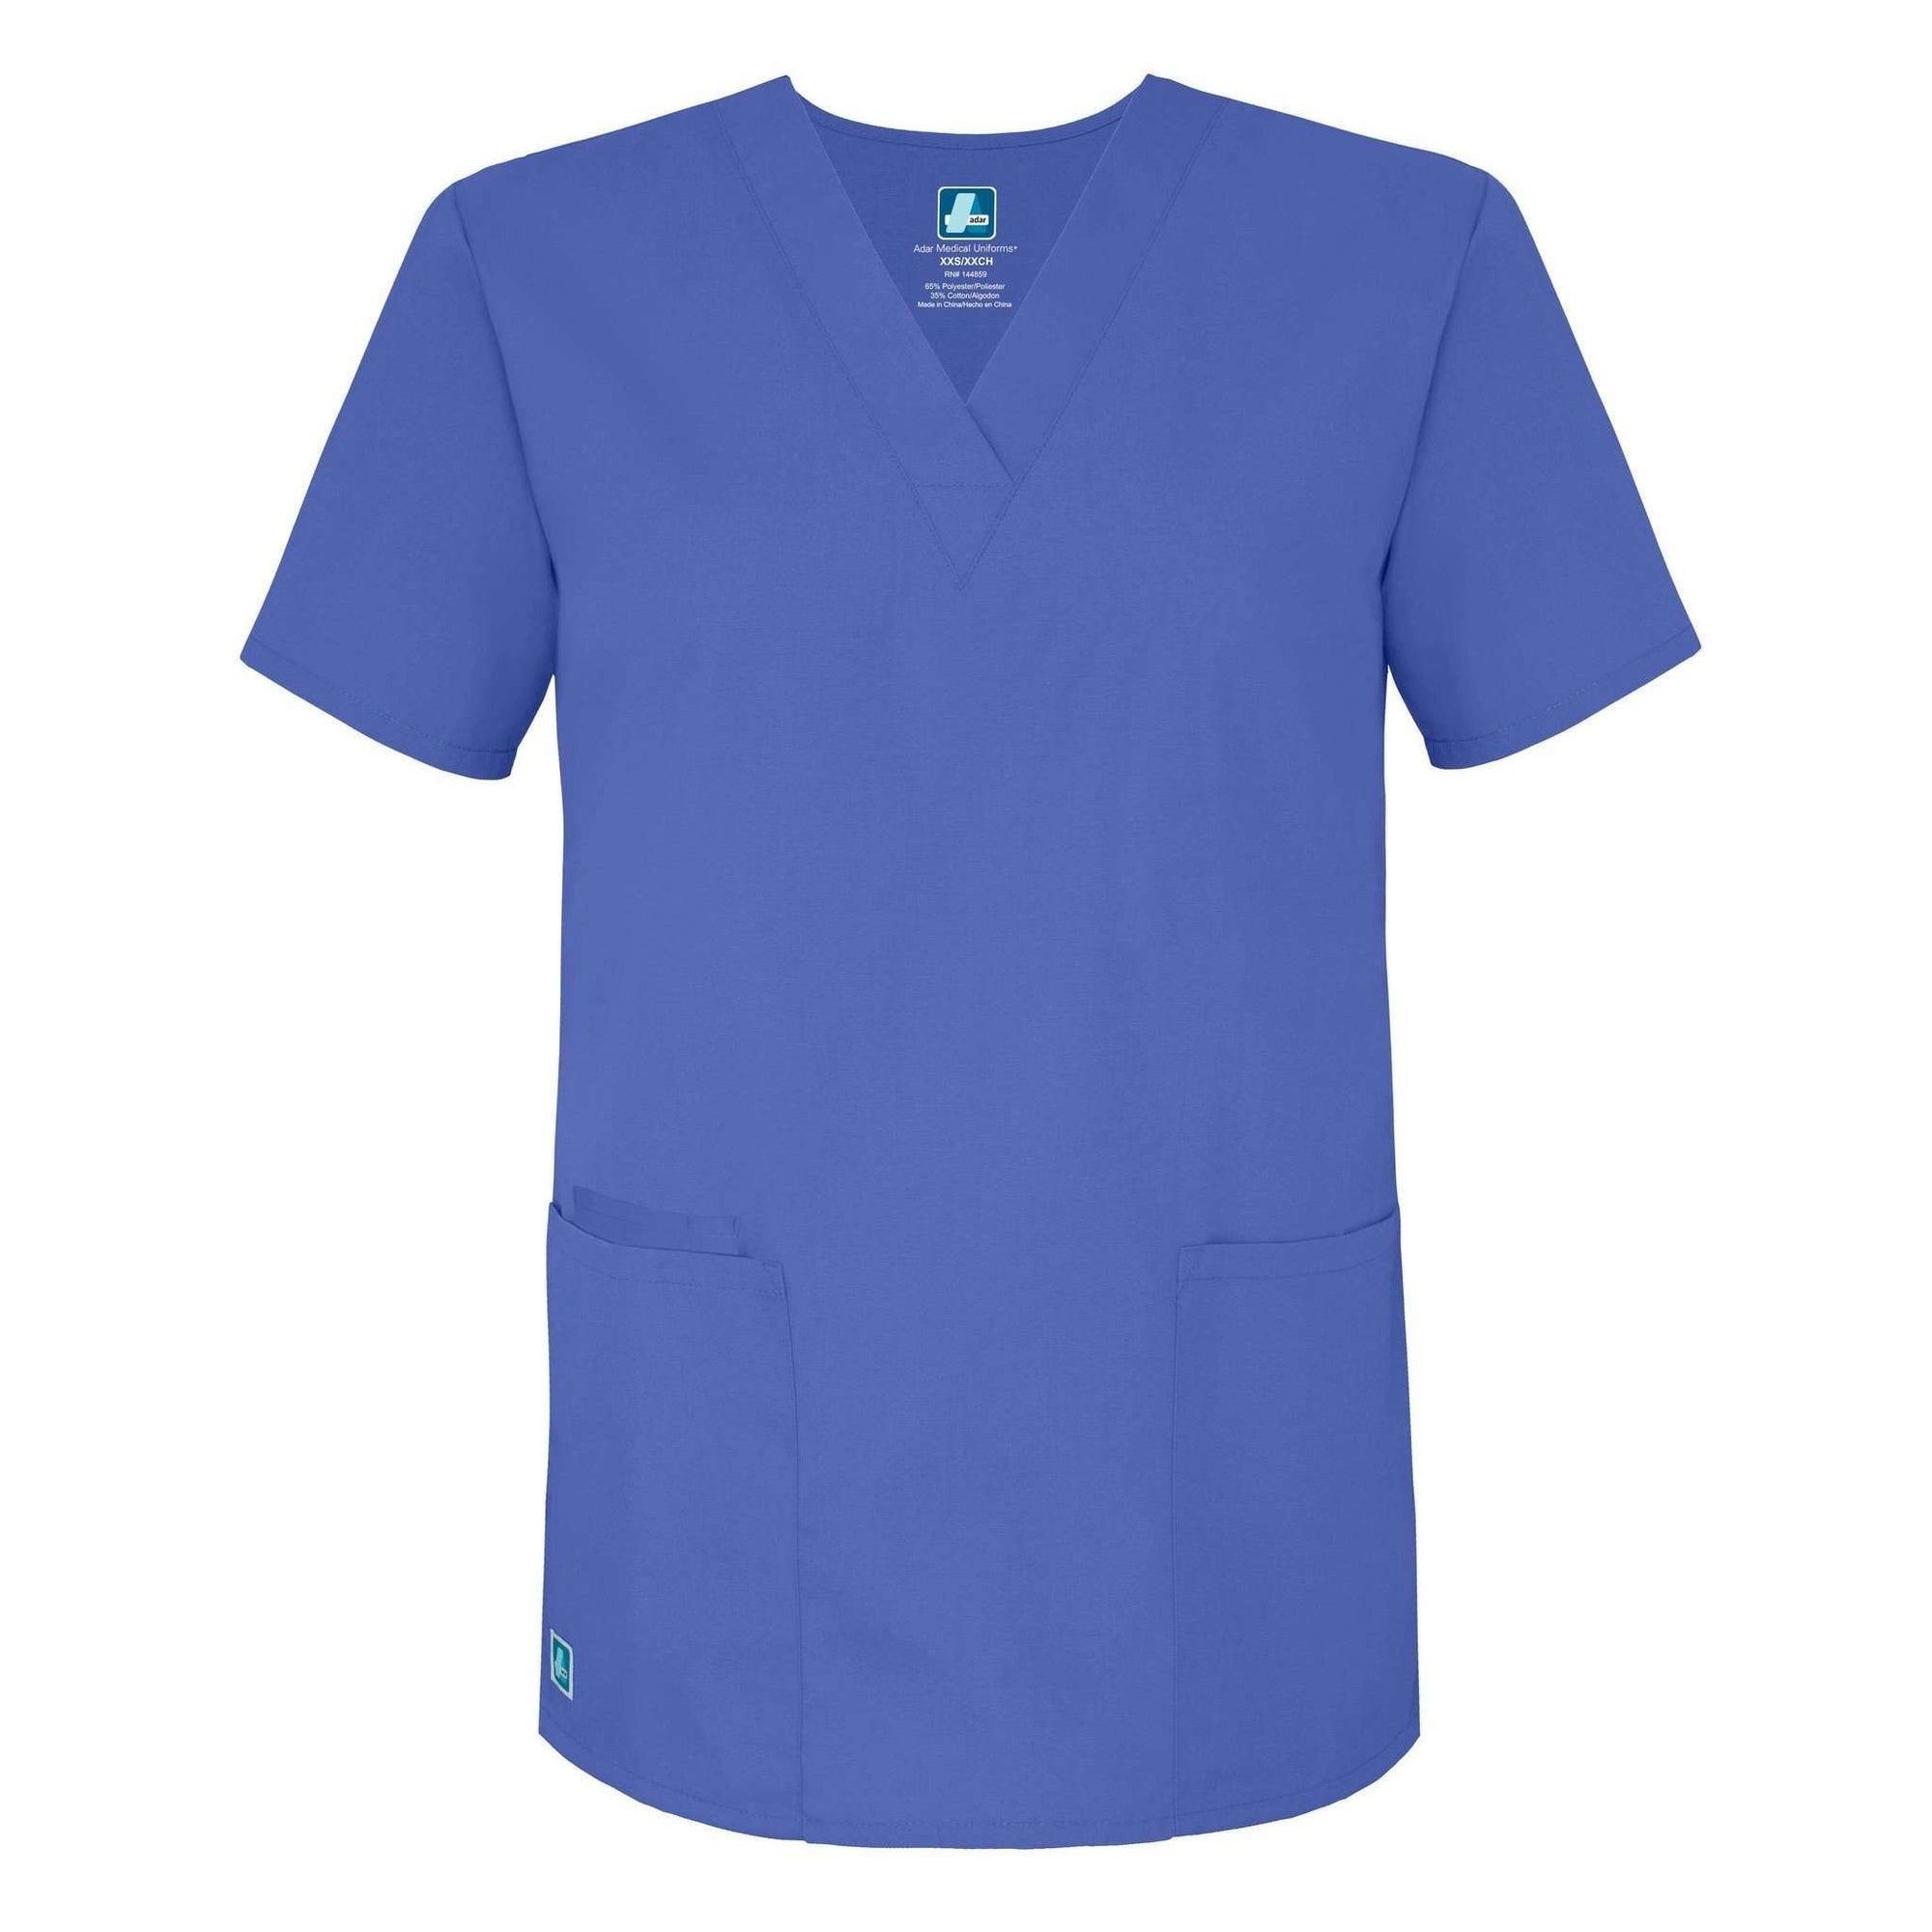  Adar - uniforms Medical Uniform Tops uniforms online Adar Universal Unisex V-Neck 2 Pocket Scrub Top Ceil Blue L - SchoolUniforms.com